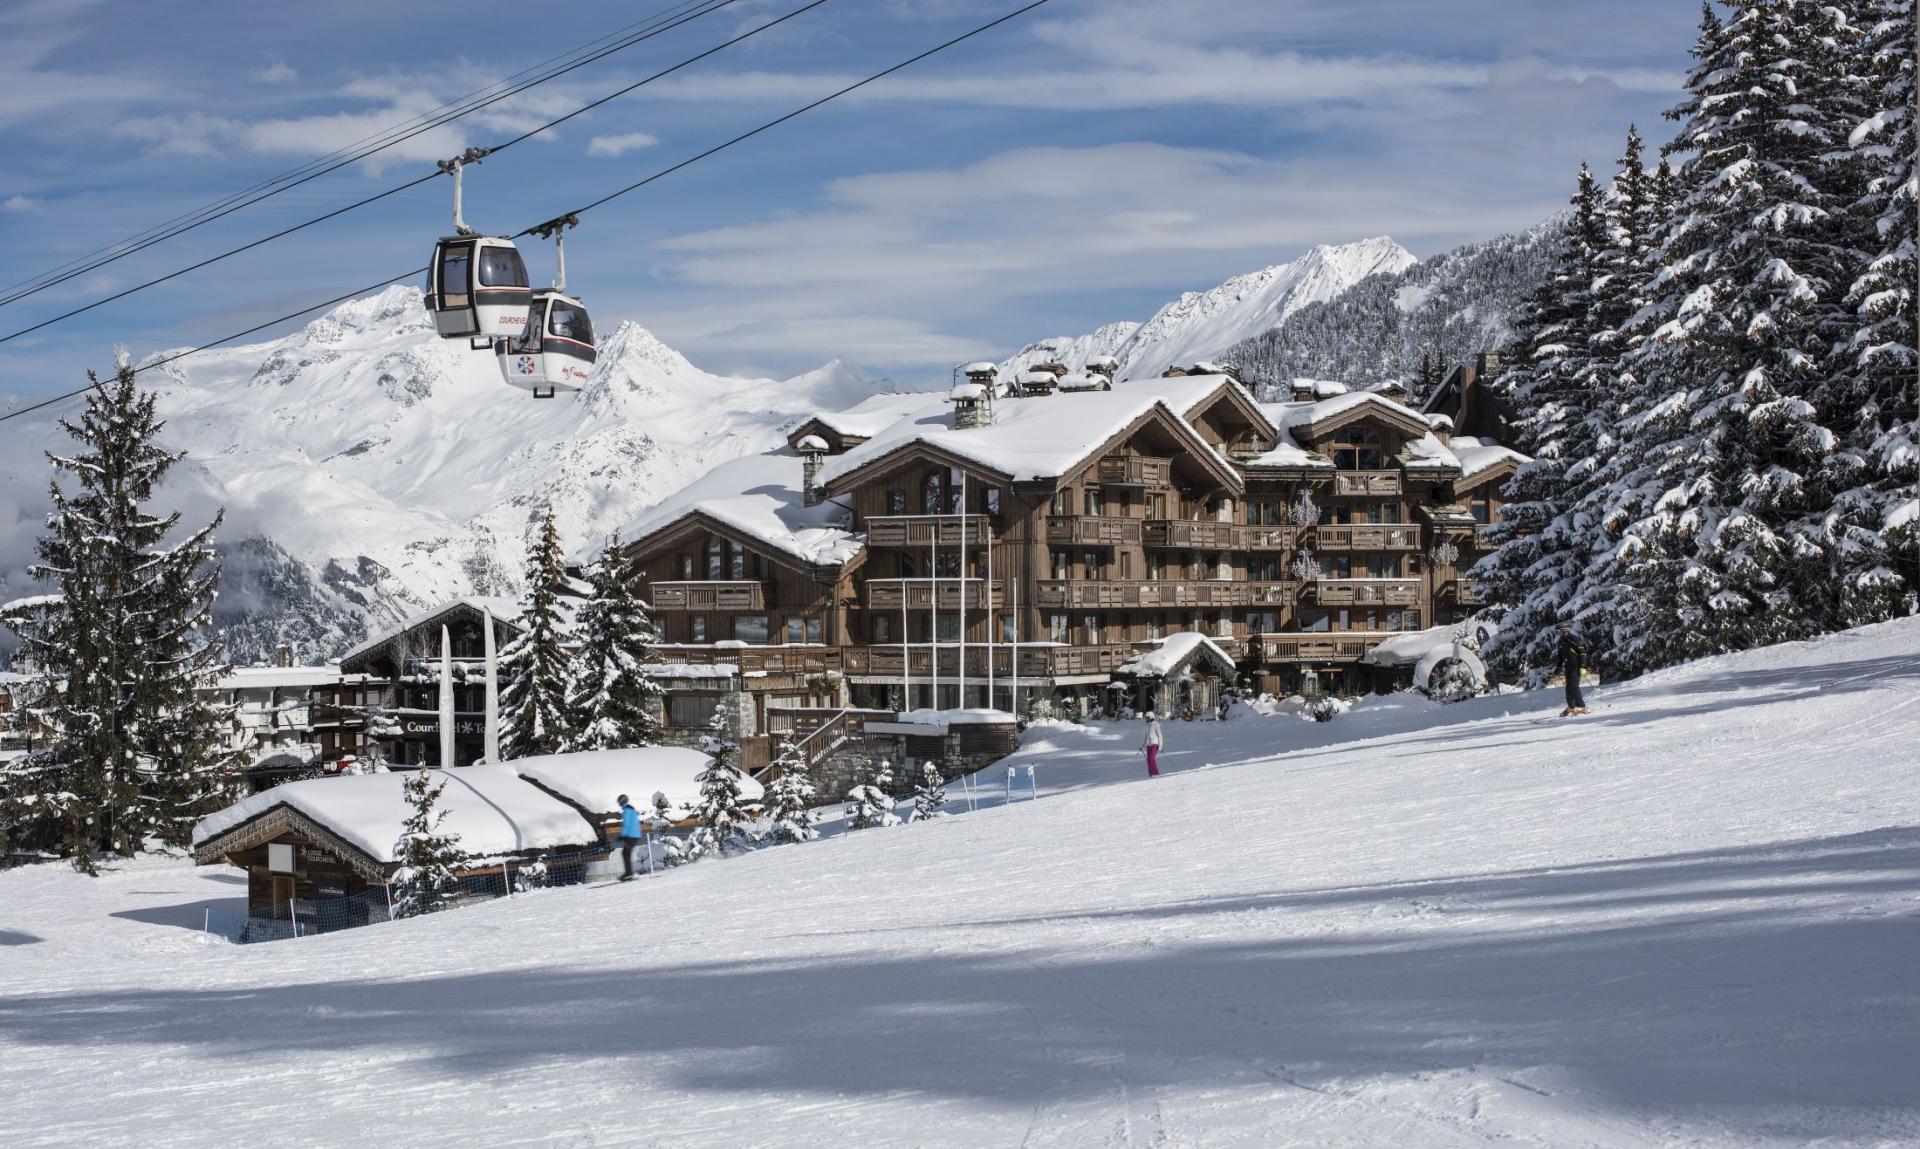 Courchevel ski resort, France - your impartial ski resort guide